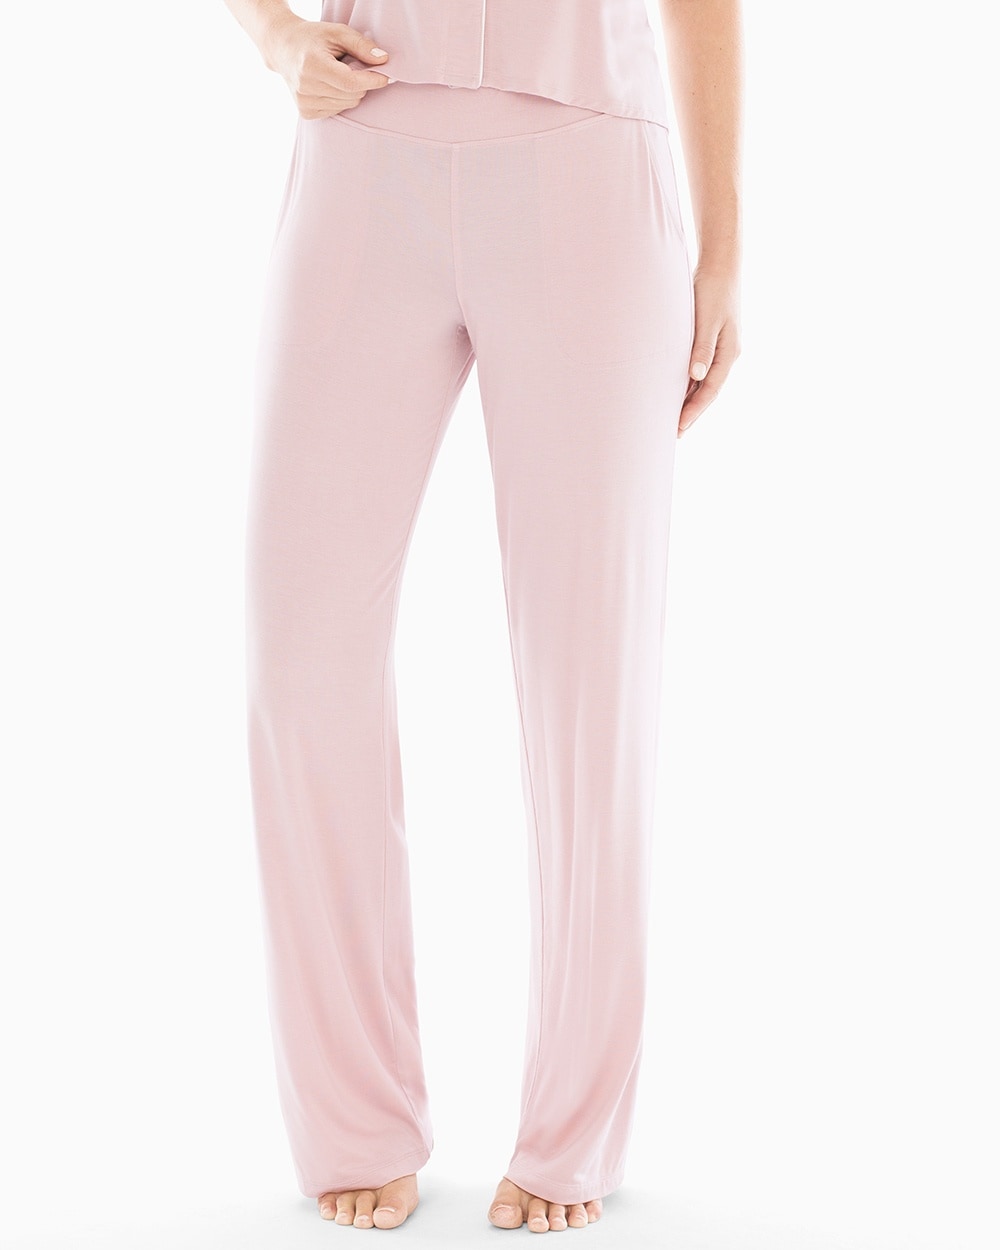 Cool Nights Pajama Pants Vintage Pink